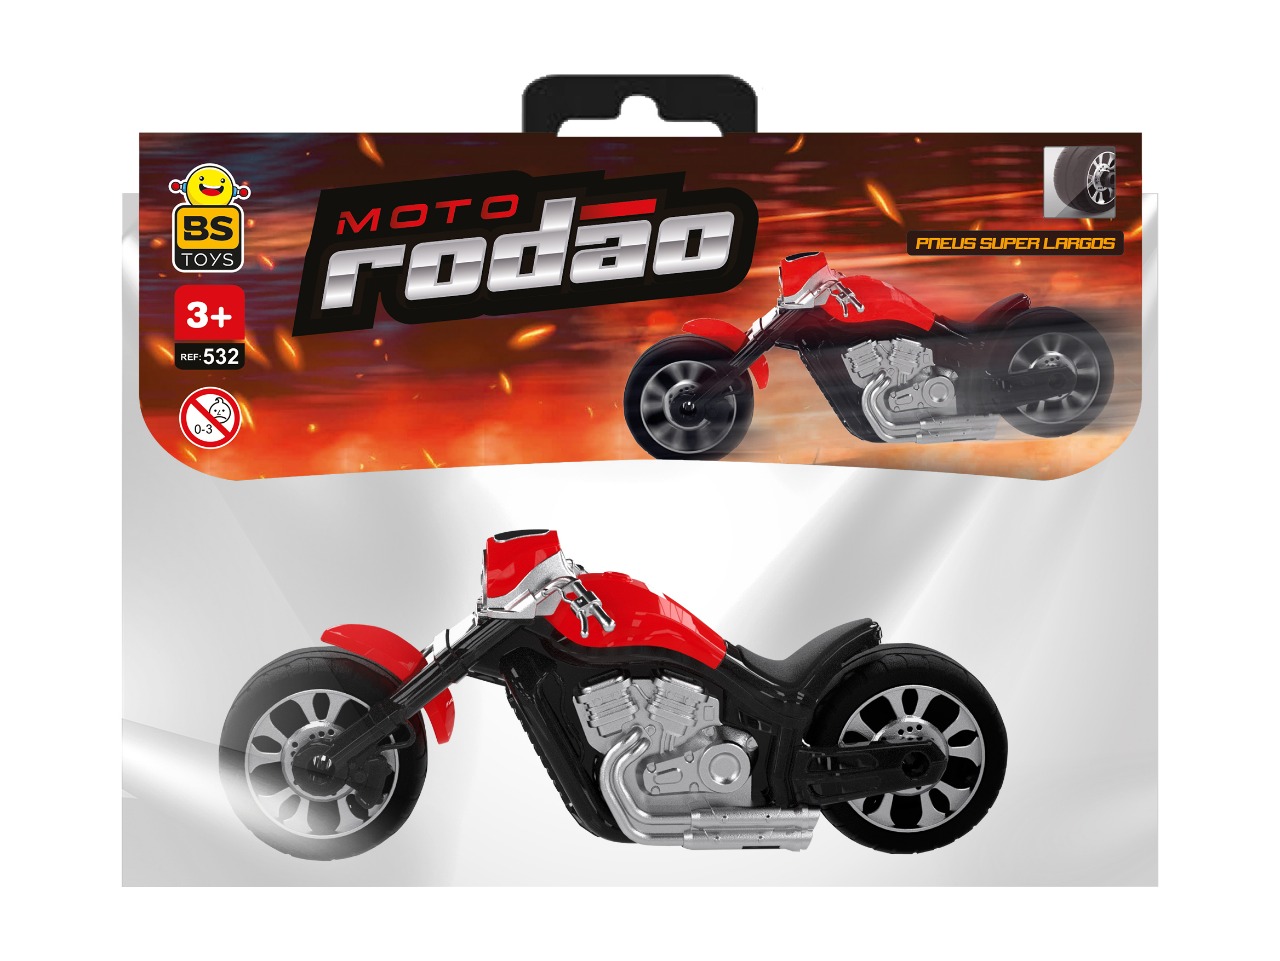 Mini Moto De Trilha Vermelha - Bs Toys